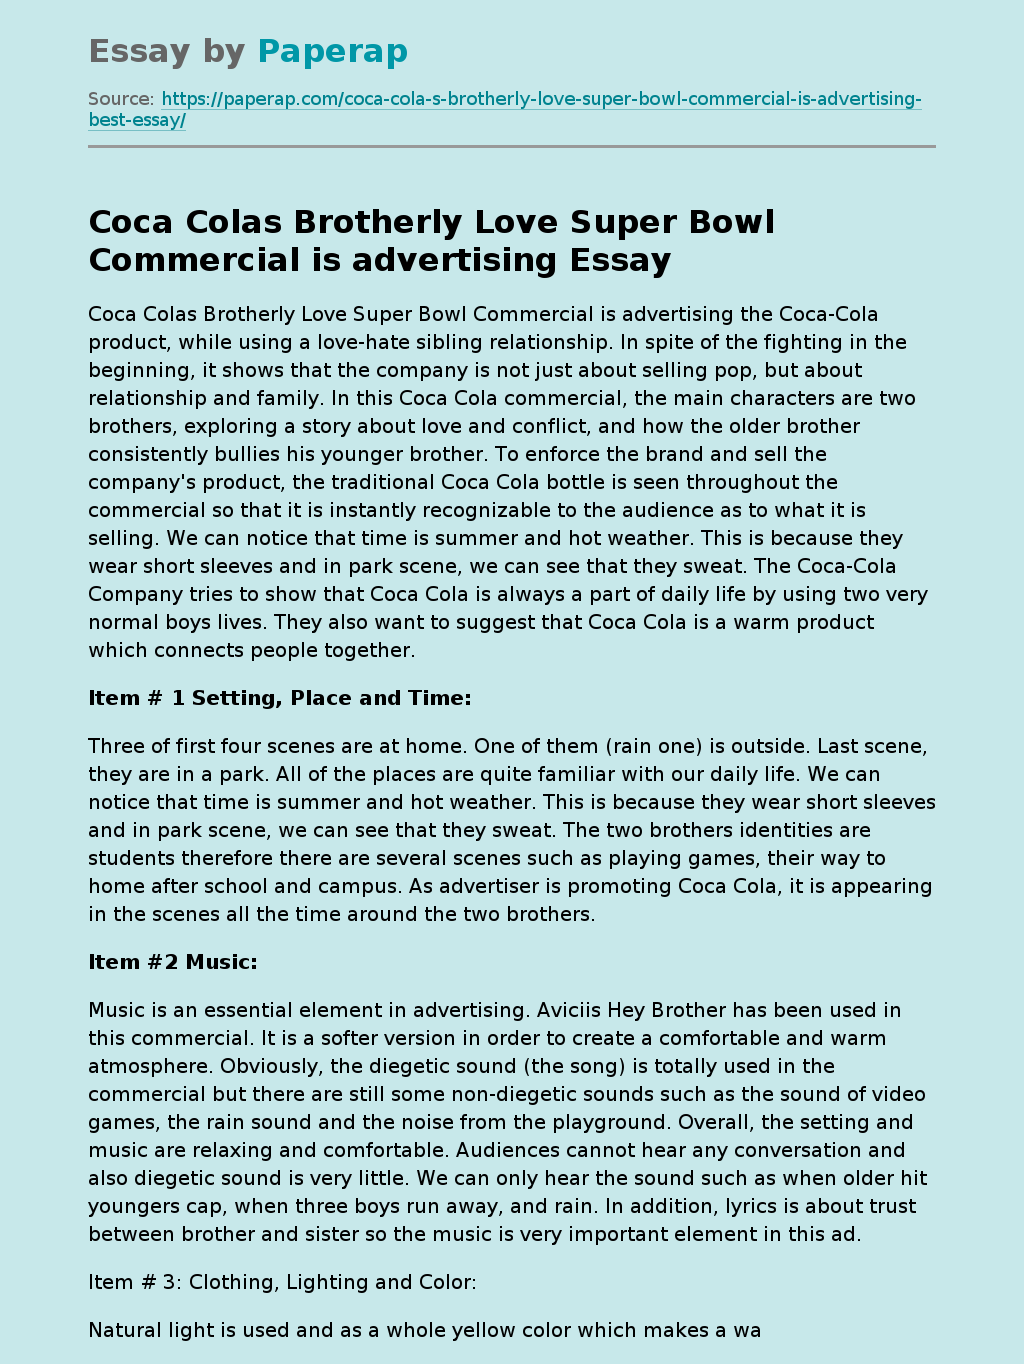 Coca Colas Brotherly Love Super Bowl Commercial is advertising